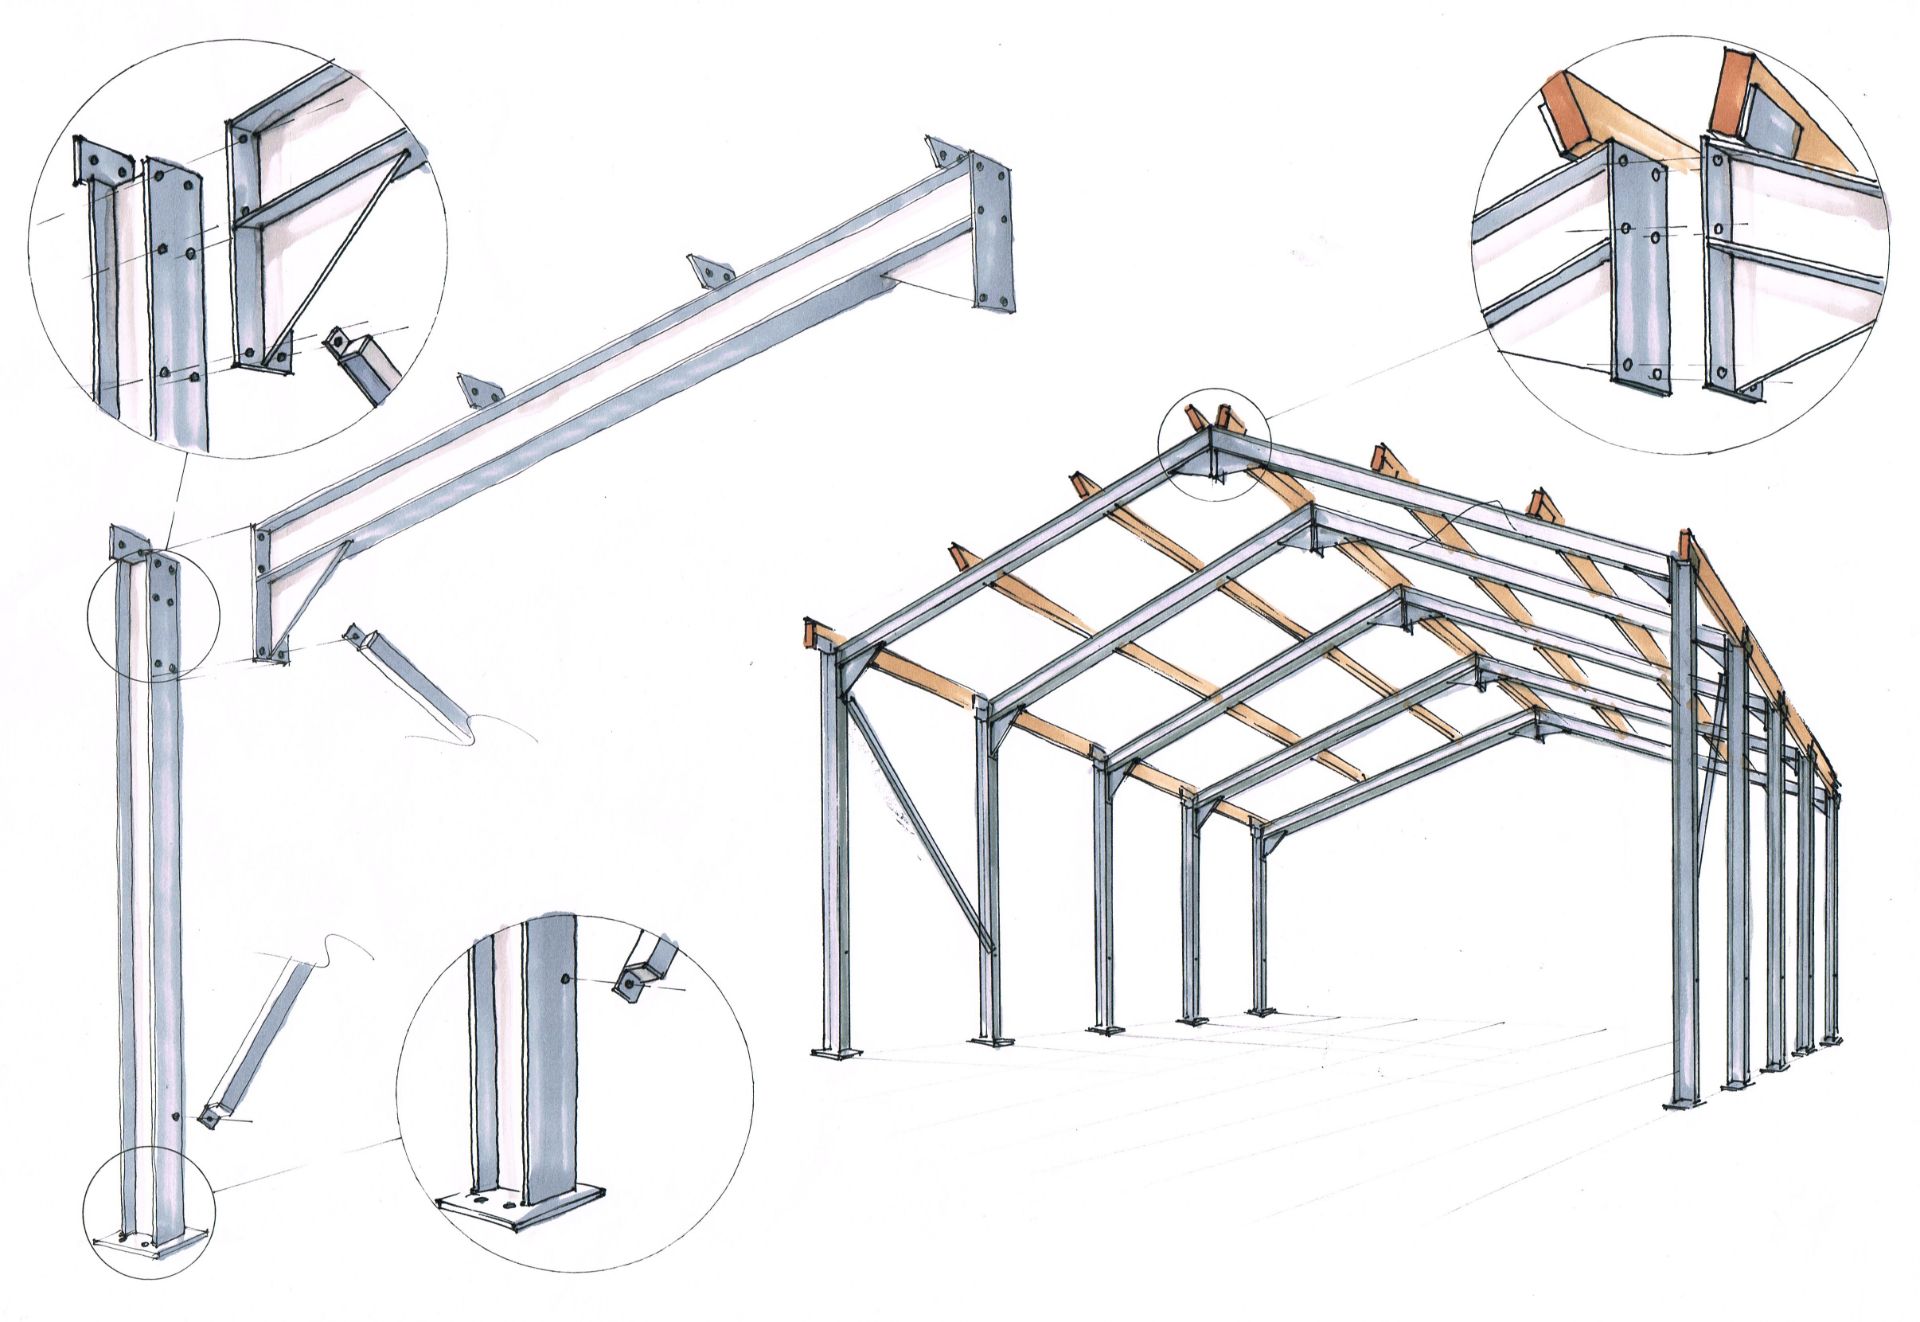 Steel framed building 45ft long x 30 ft wide x 10 ft @ eaves 12 .5 deg roof pitch - Image 6 of 9